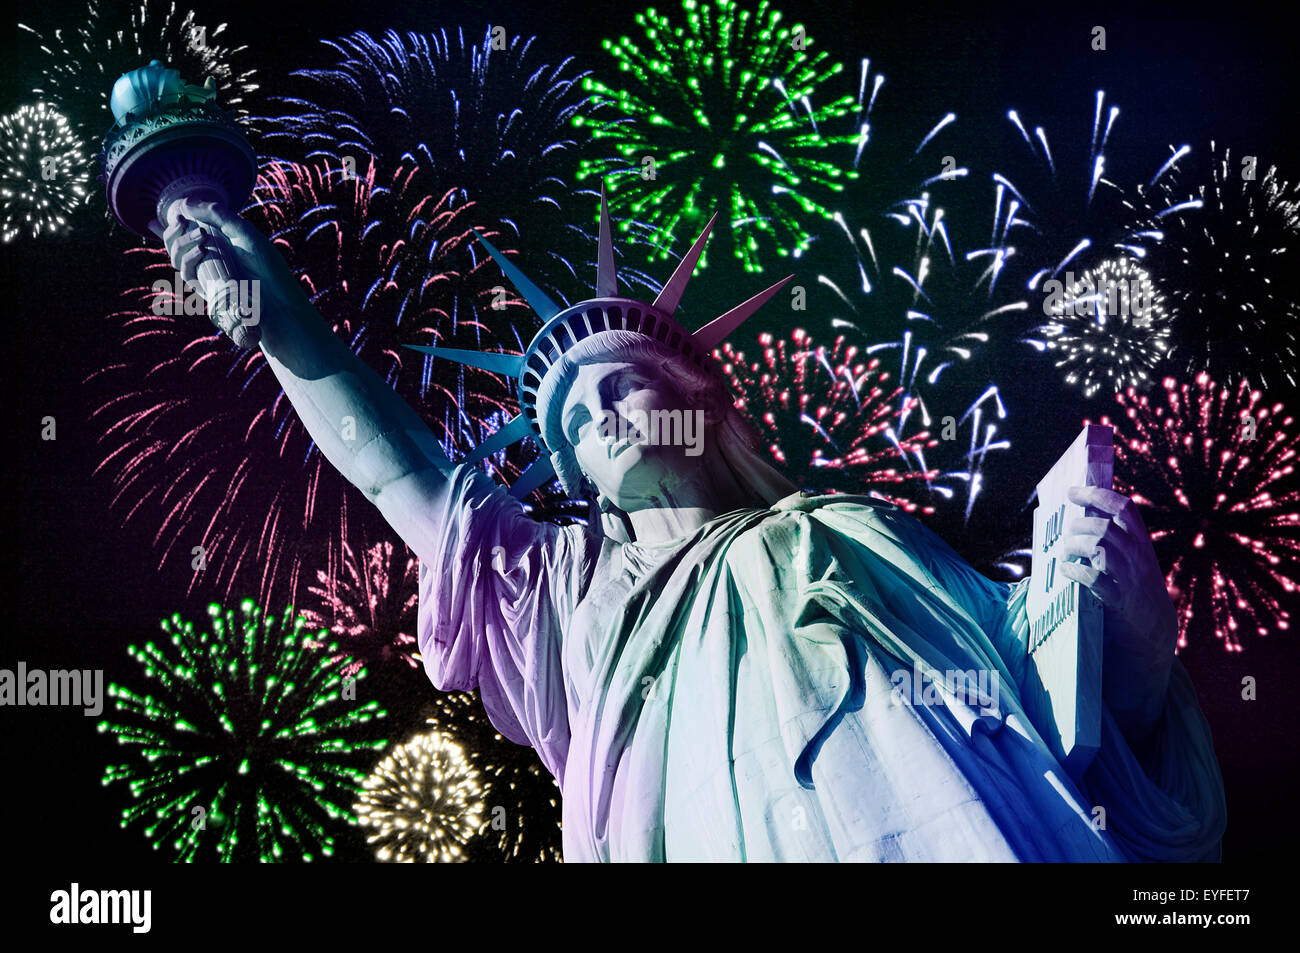 USA, New York City, Statue of liberty and firework display Stock Photo